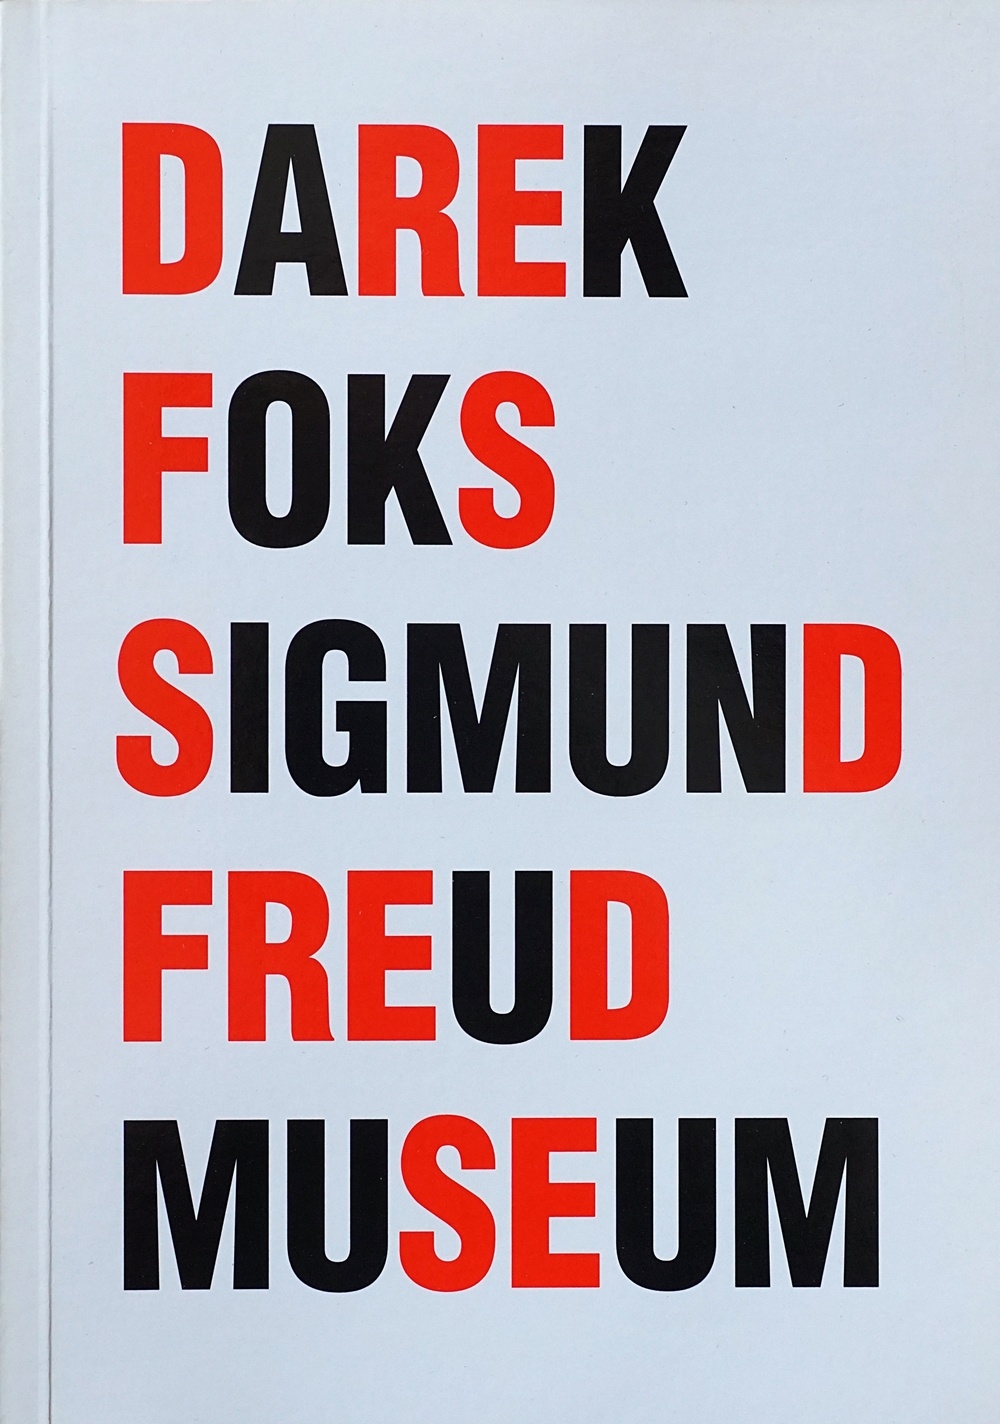 Książka „Sigmund Freud Museum” Darka Foksa z autografem (2010)